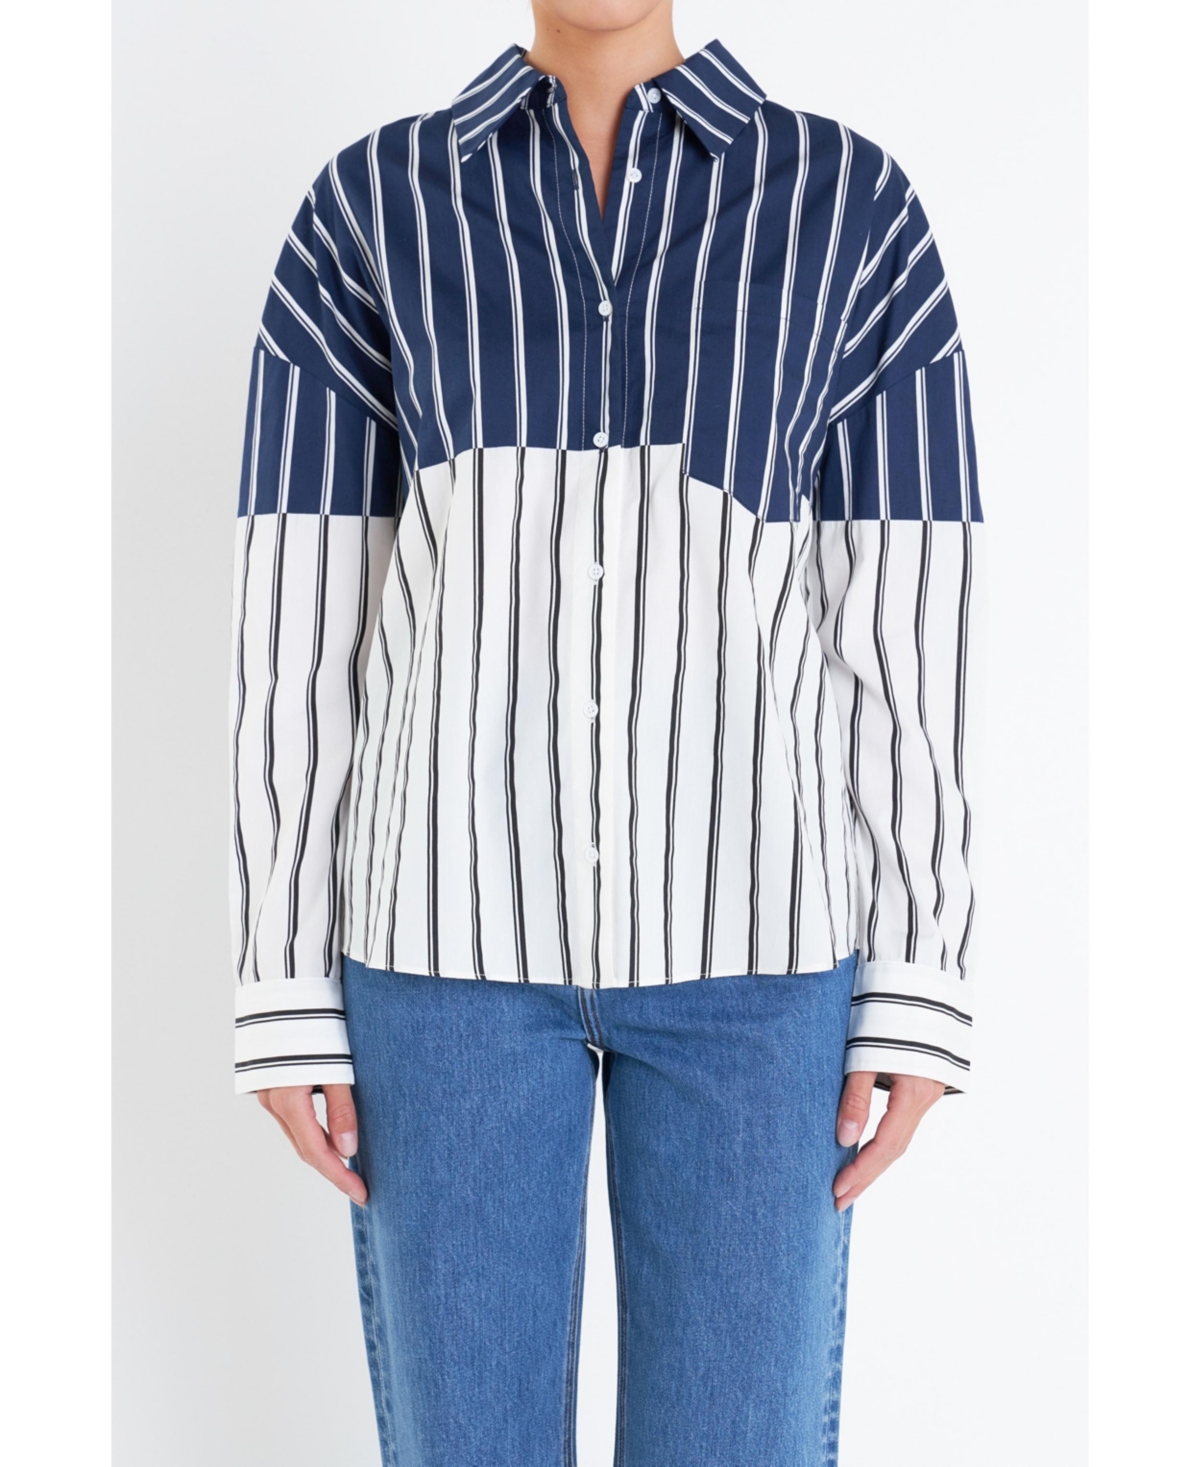 Women's Colorblock Stripe Shirt - Navy/white